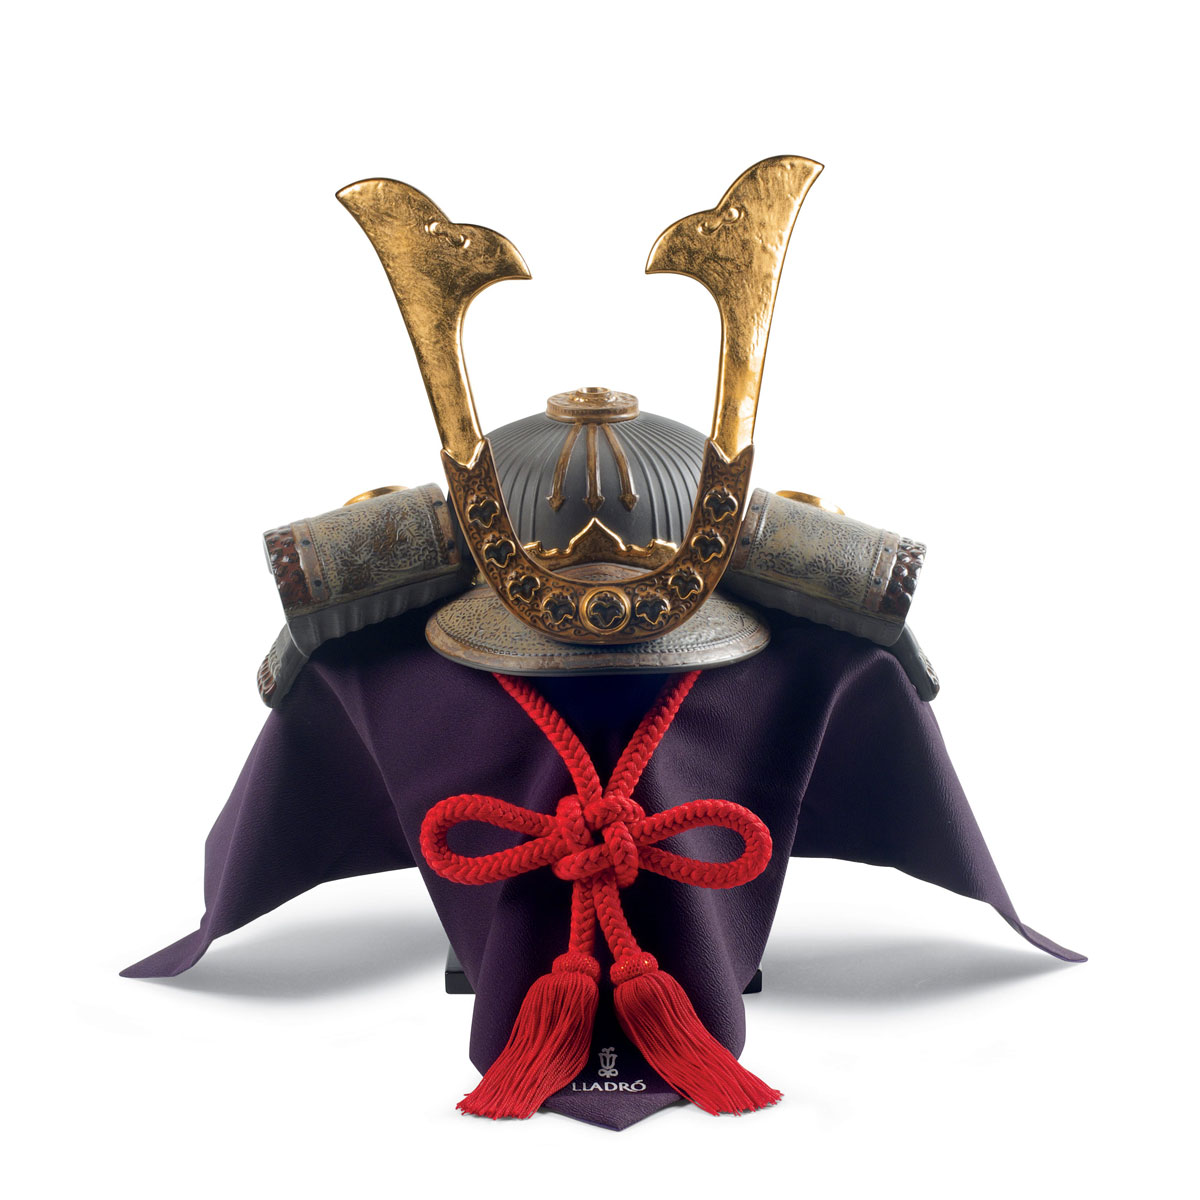 Lladro Classic Sculpture, Samurai Helmet Figurine. Limited Edition